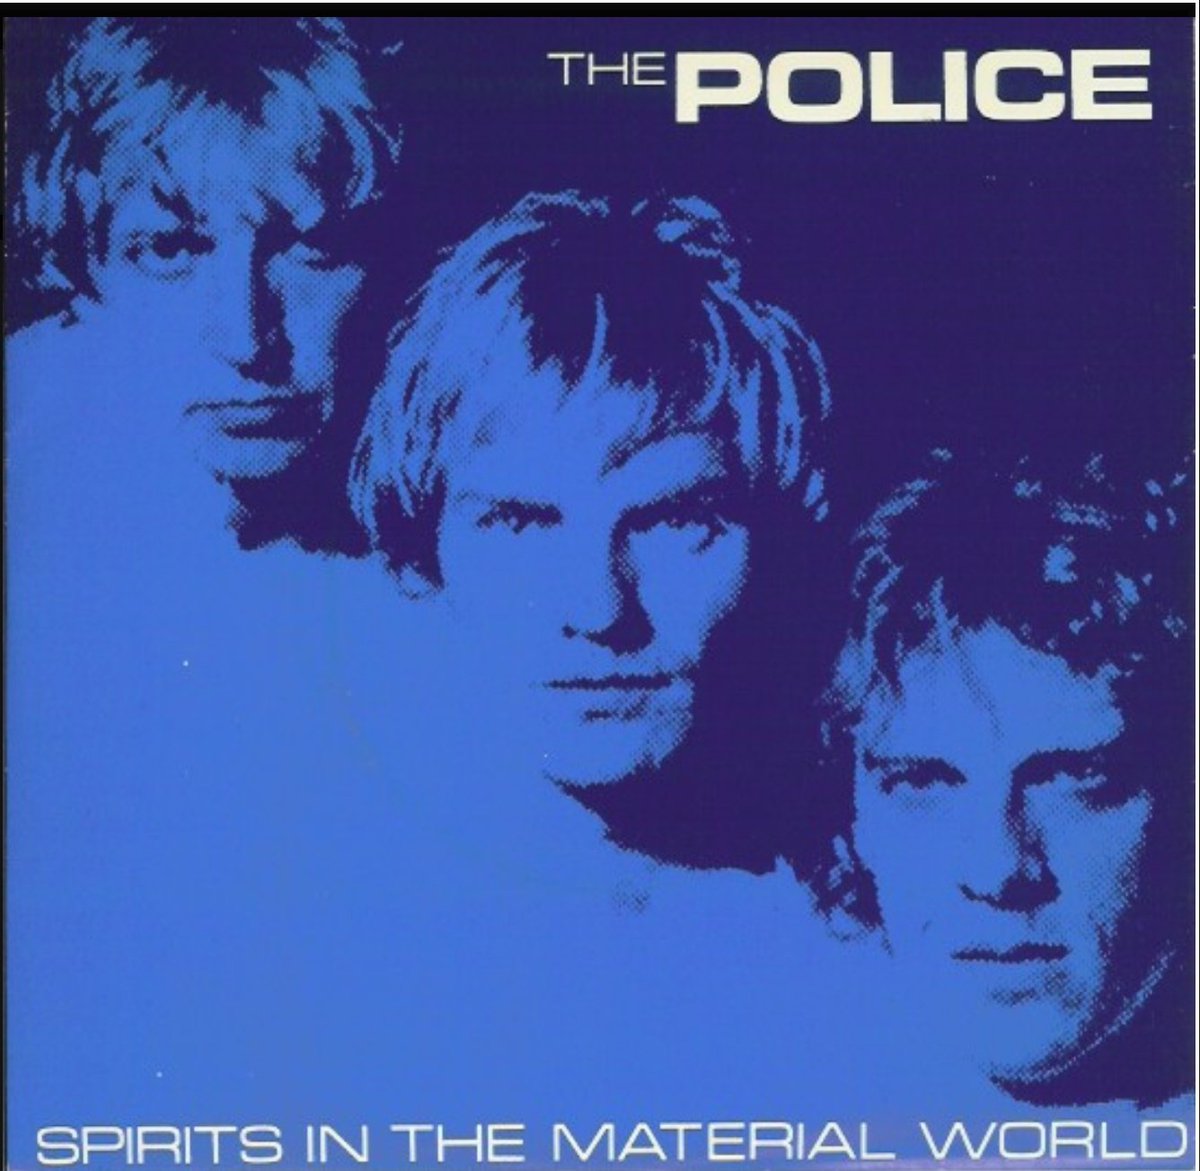 #45sUnder3 

Day 30

The Police - Spirits In The Material World 

youtu.be/BHOevX4DlGk